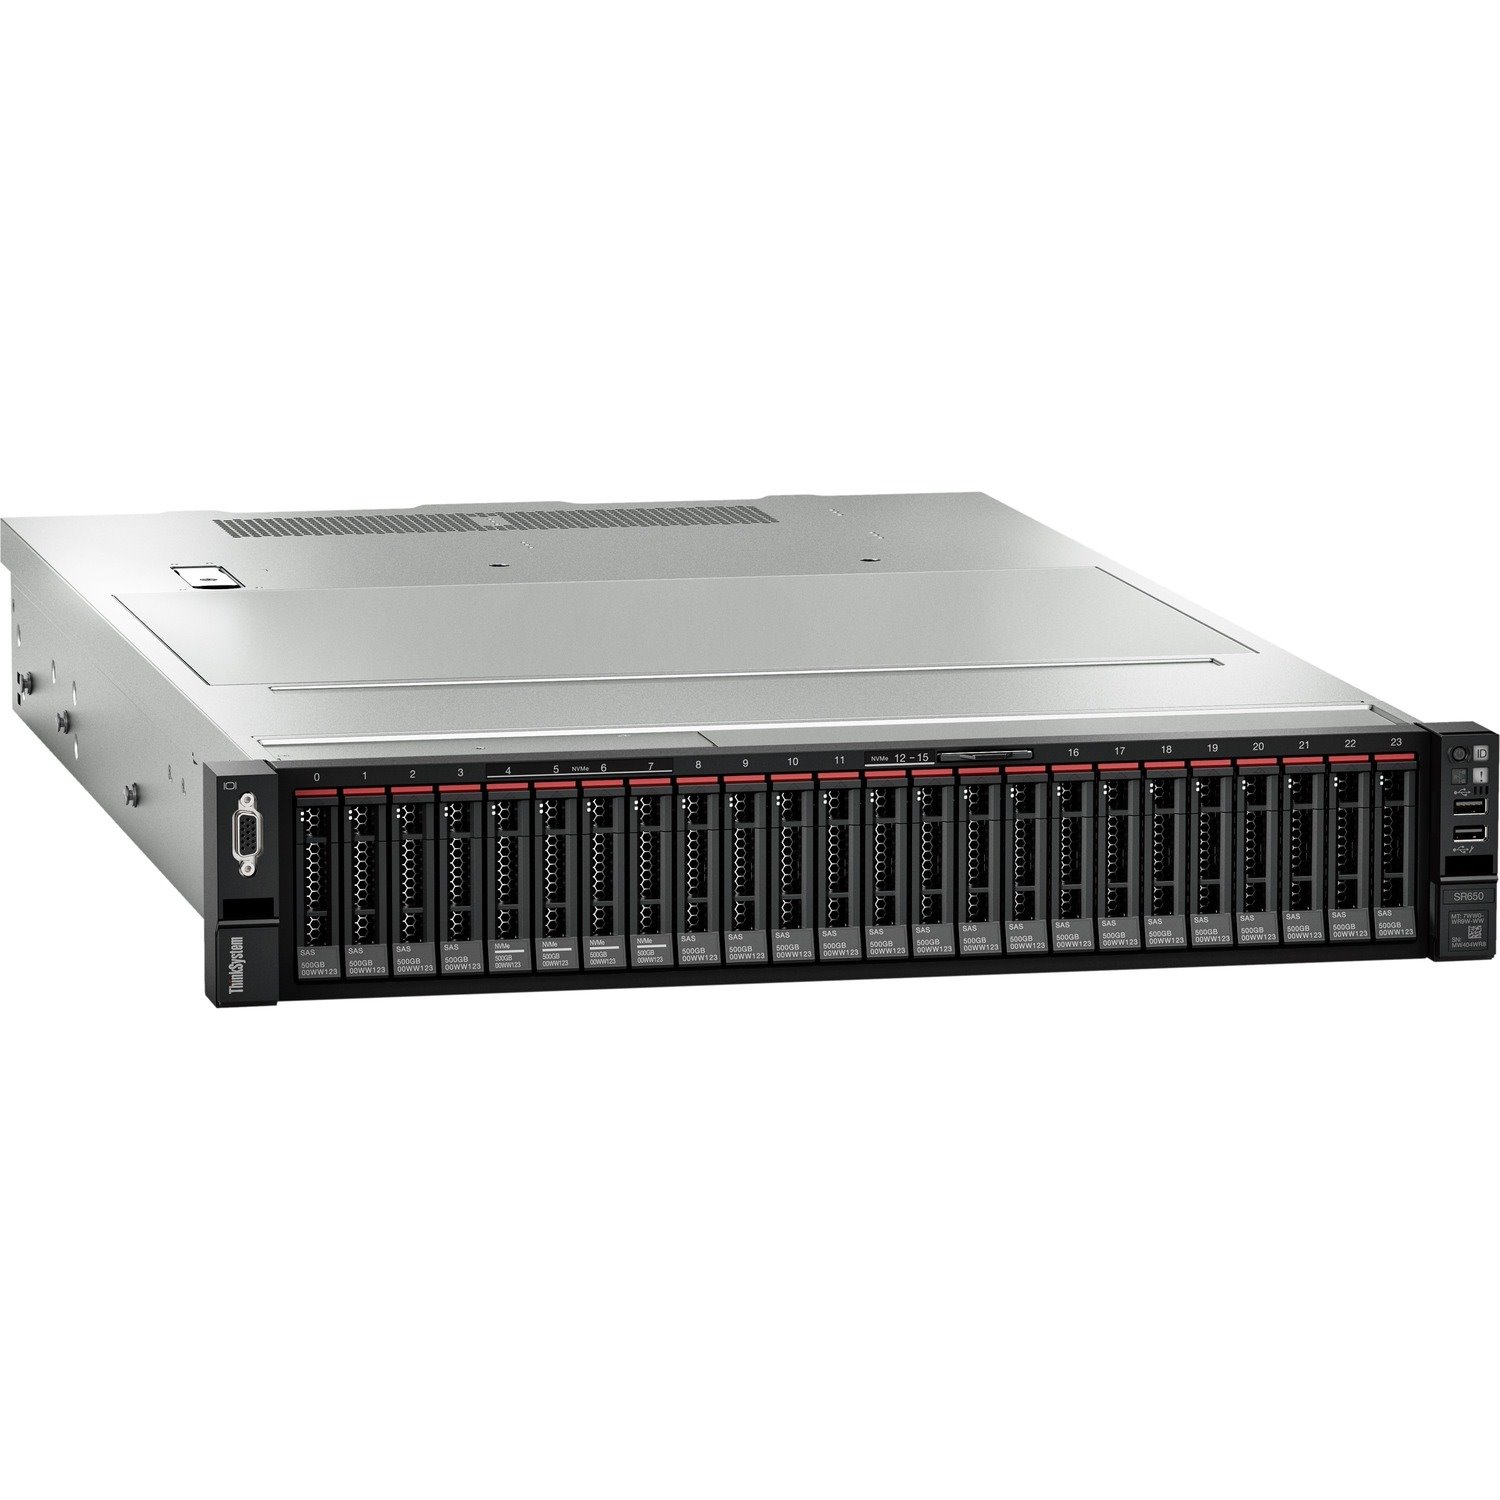 Lenovo ThinkSystem SR650 7X06A0EZAU 2U Rack Server - 1 x Intel Xeon Silver 4208 2.10 GHz - 16 GB RAM - 12Gb/s SAS, Serial ATA/600 Controller